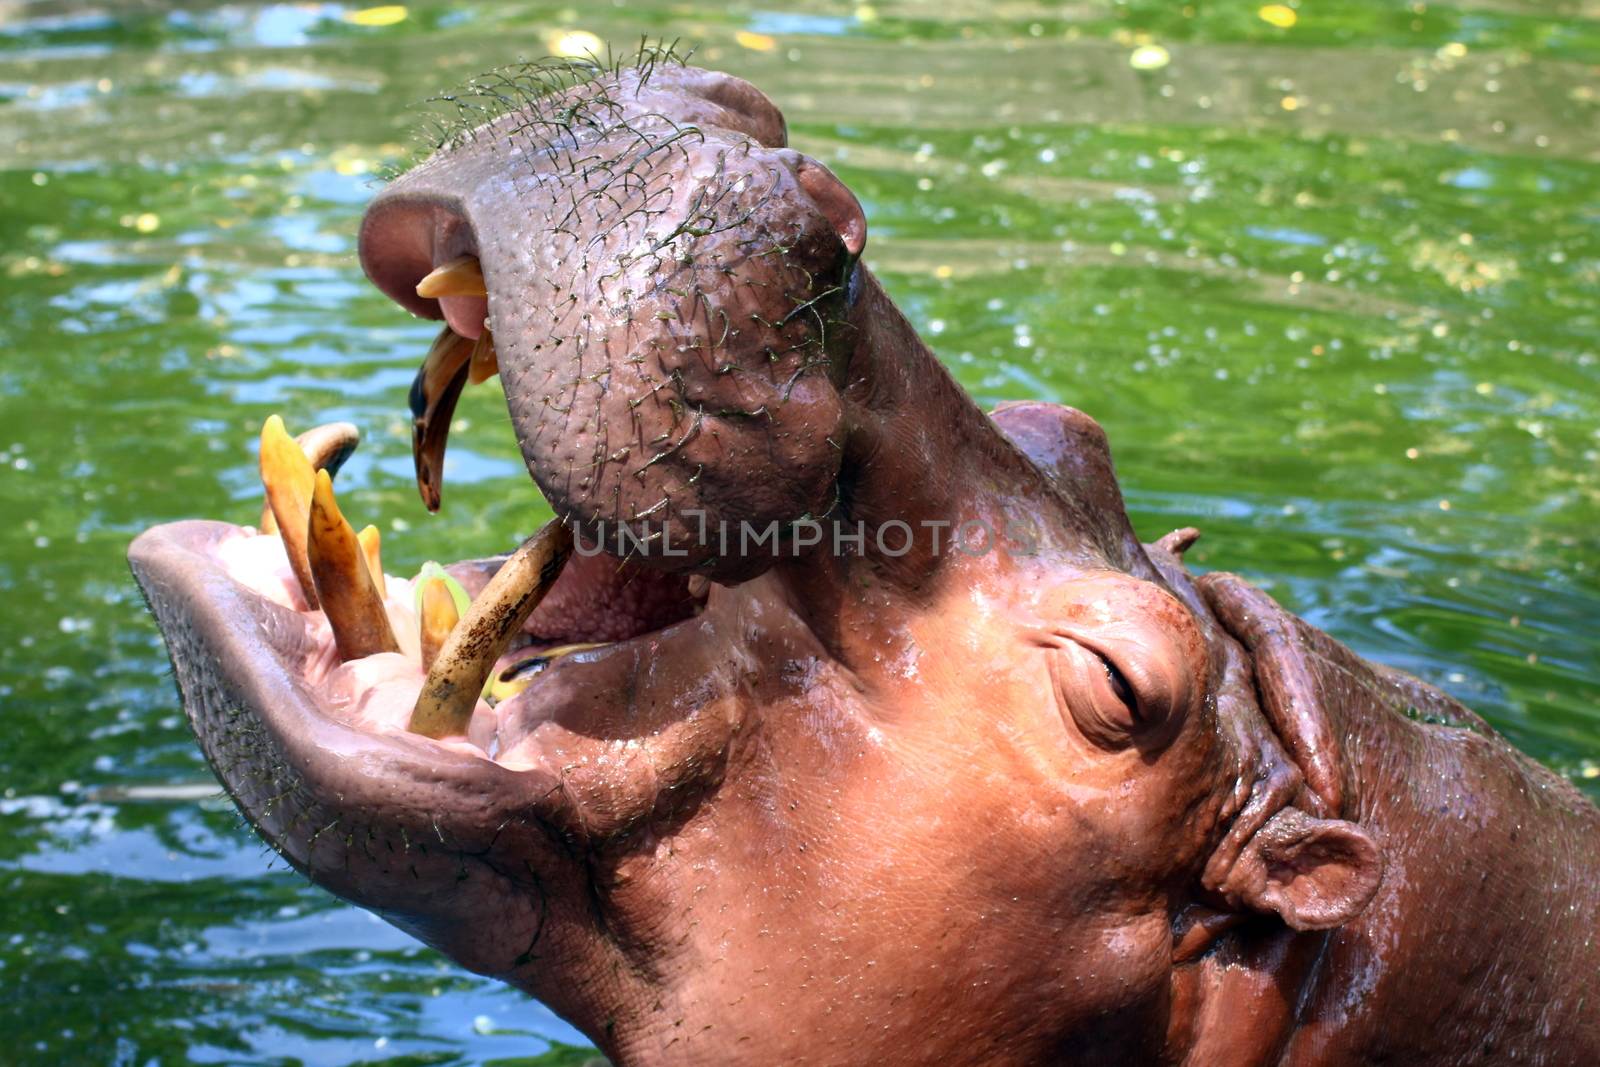 Hippo, Hippopotamus open mouth, Hippopotamus in water close up